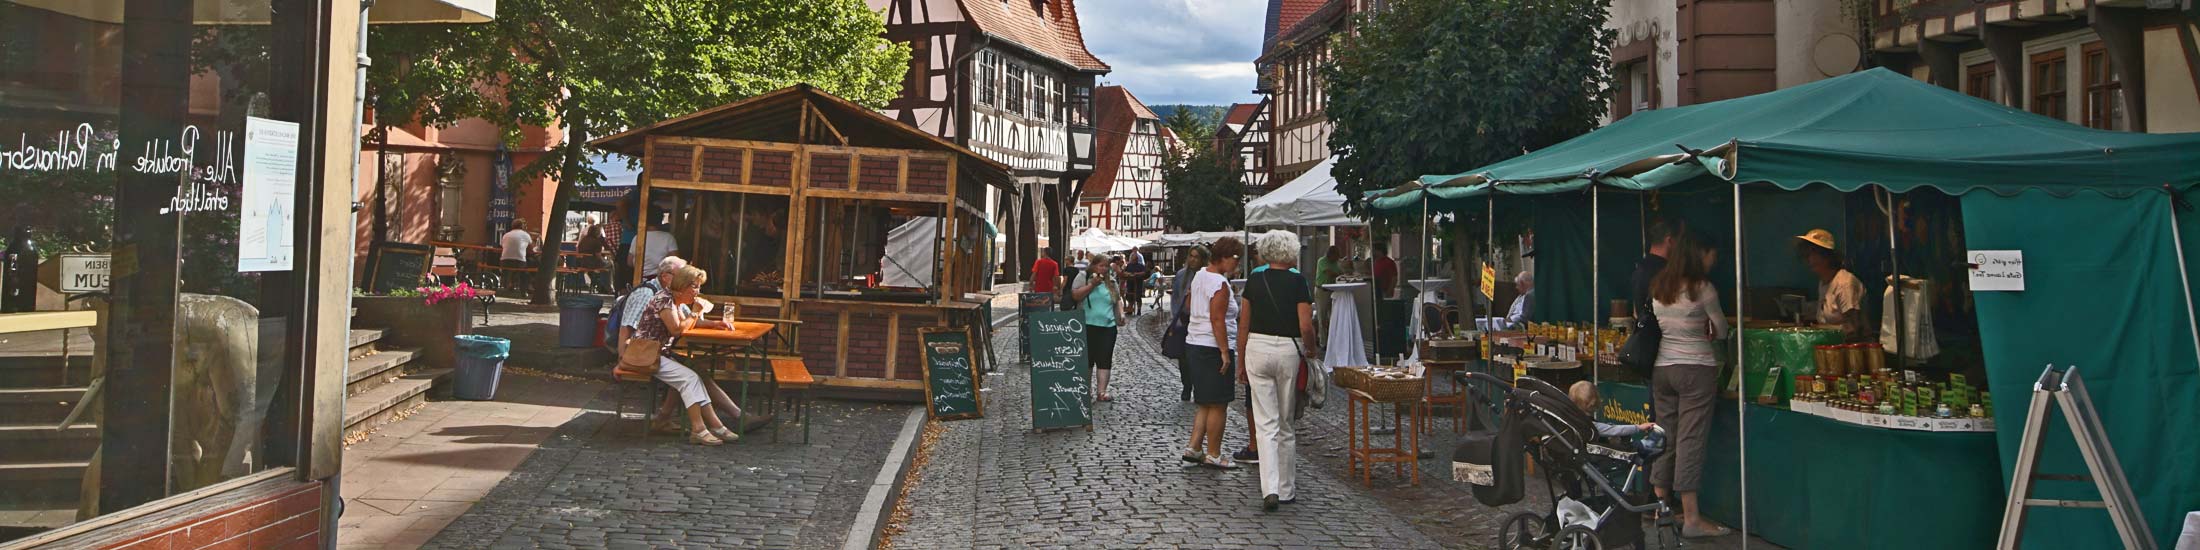 Michelstadt-Stadtfest-Panorama-Reisegruppen